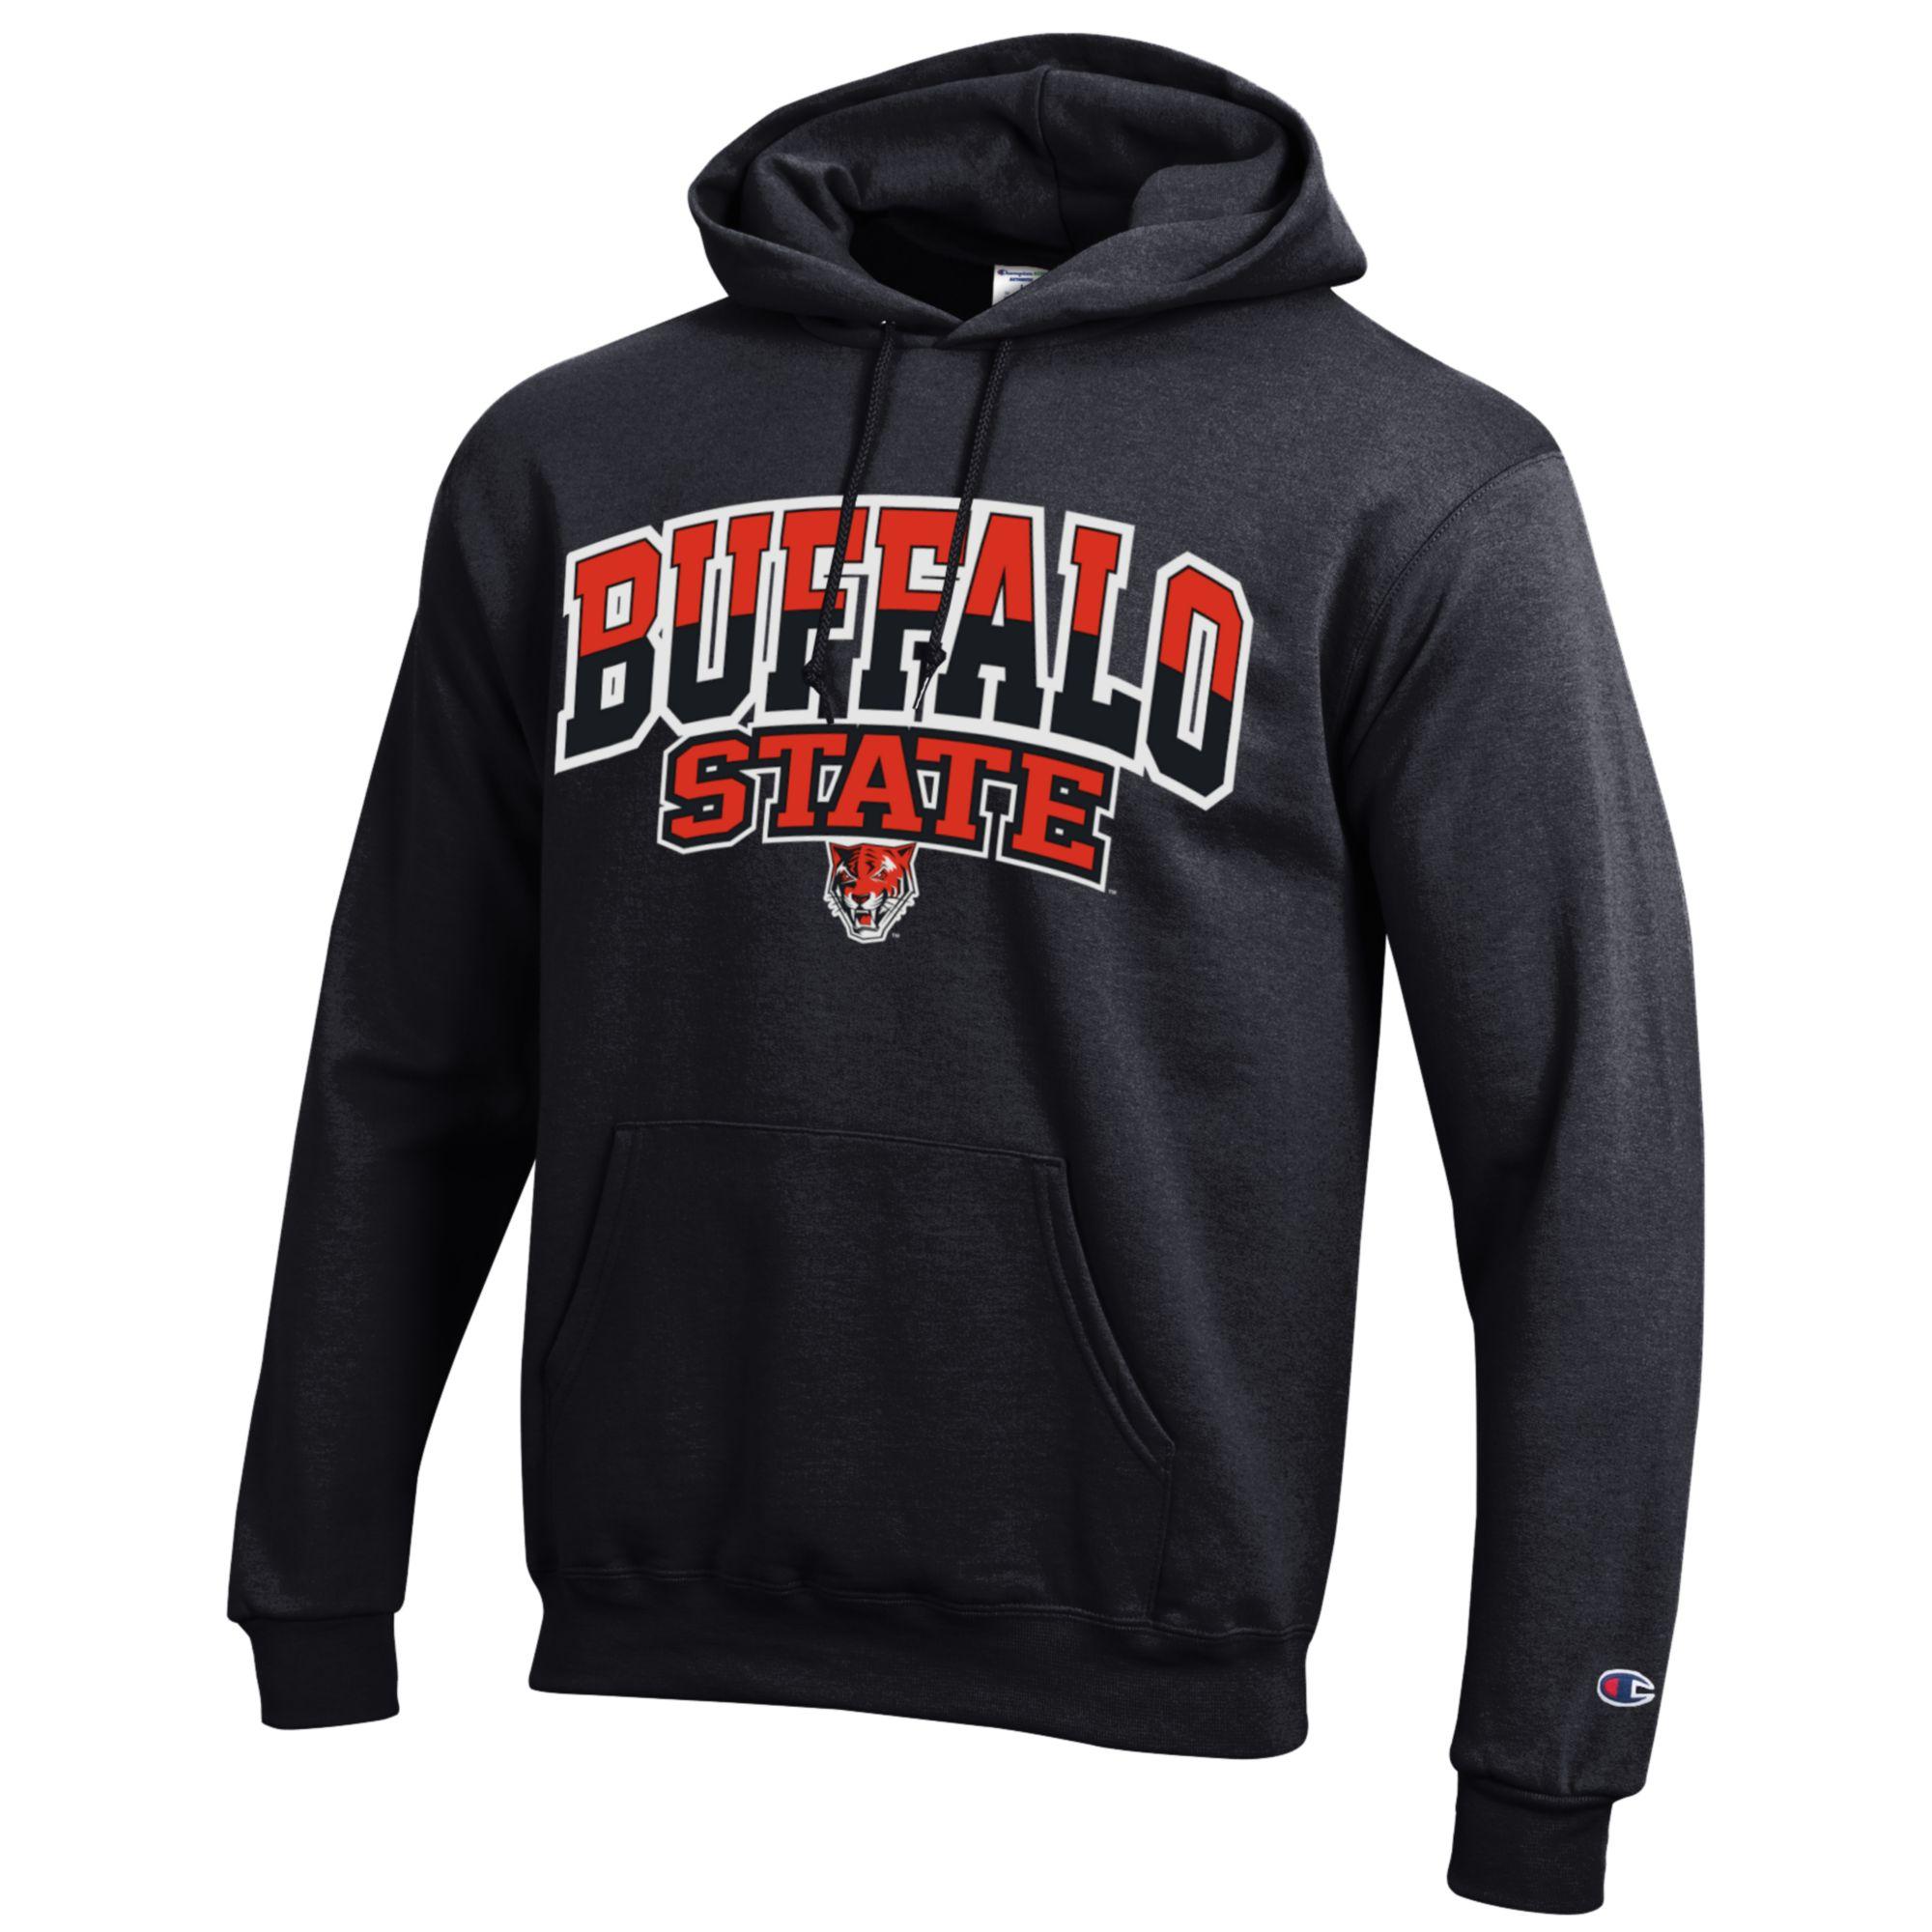 Buffalo State Hooded Sweatshirt, Black